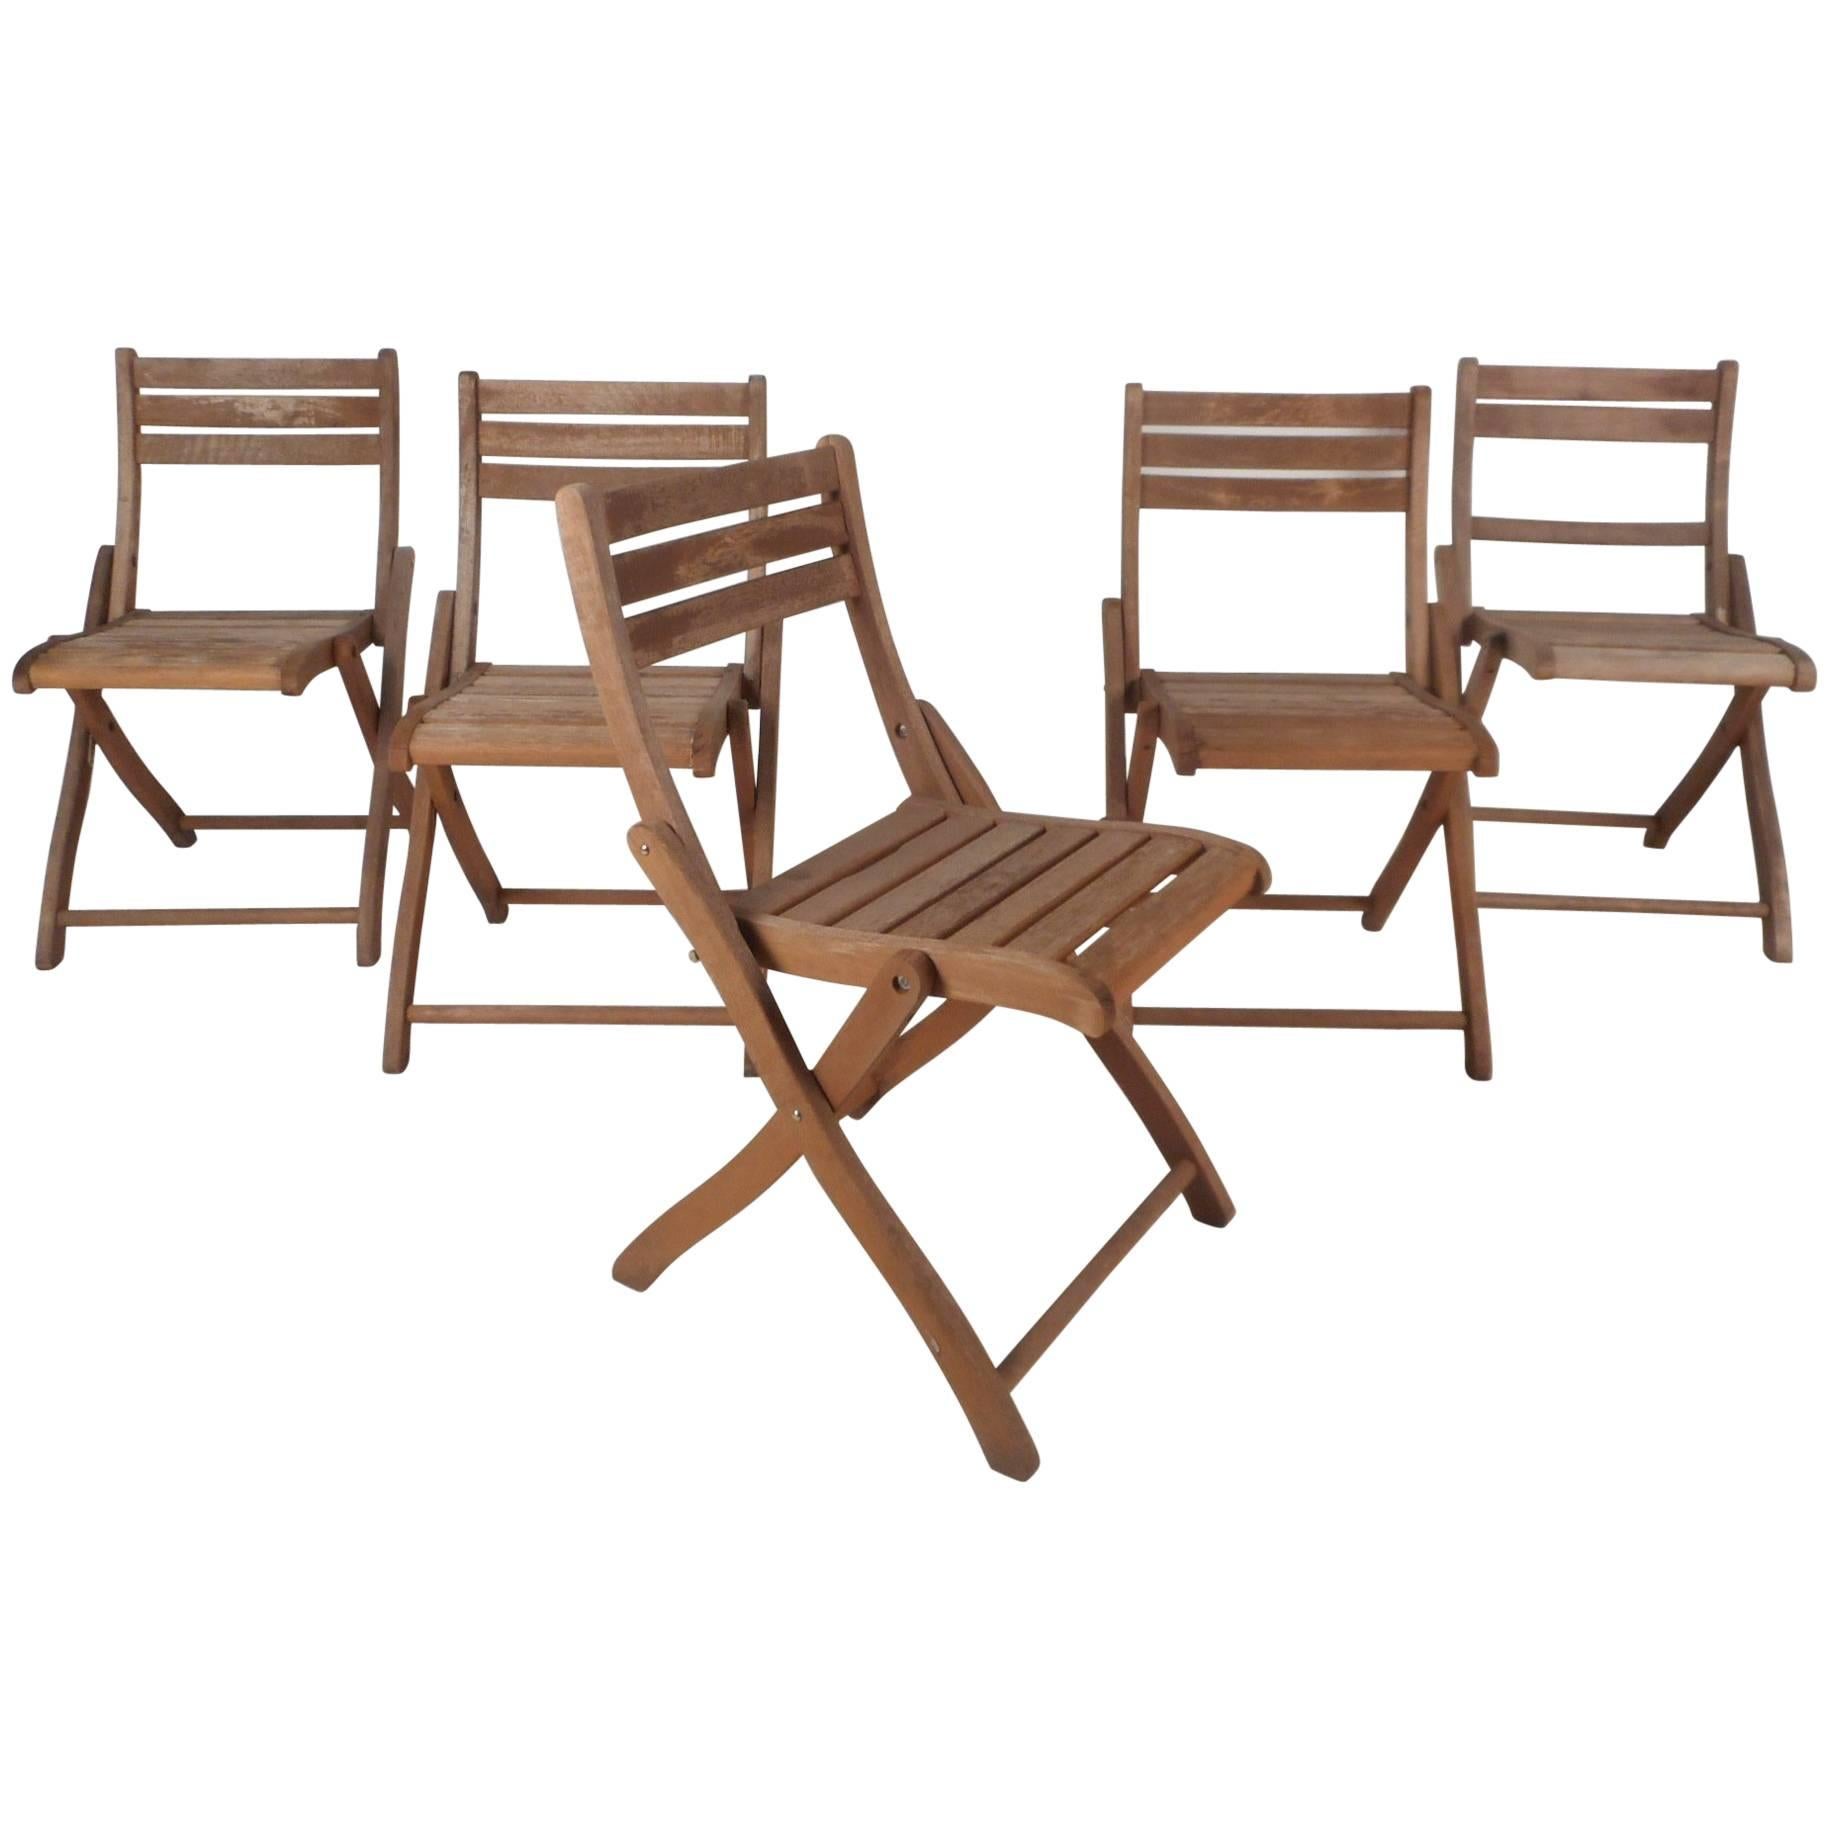 Set of Five Mid-Century Modern Wood Folding Chairs